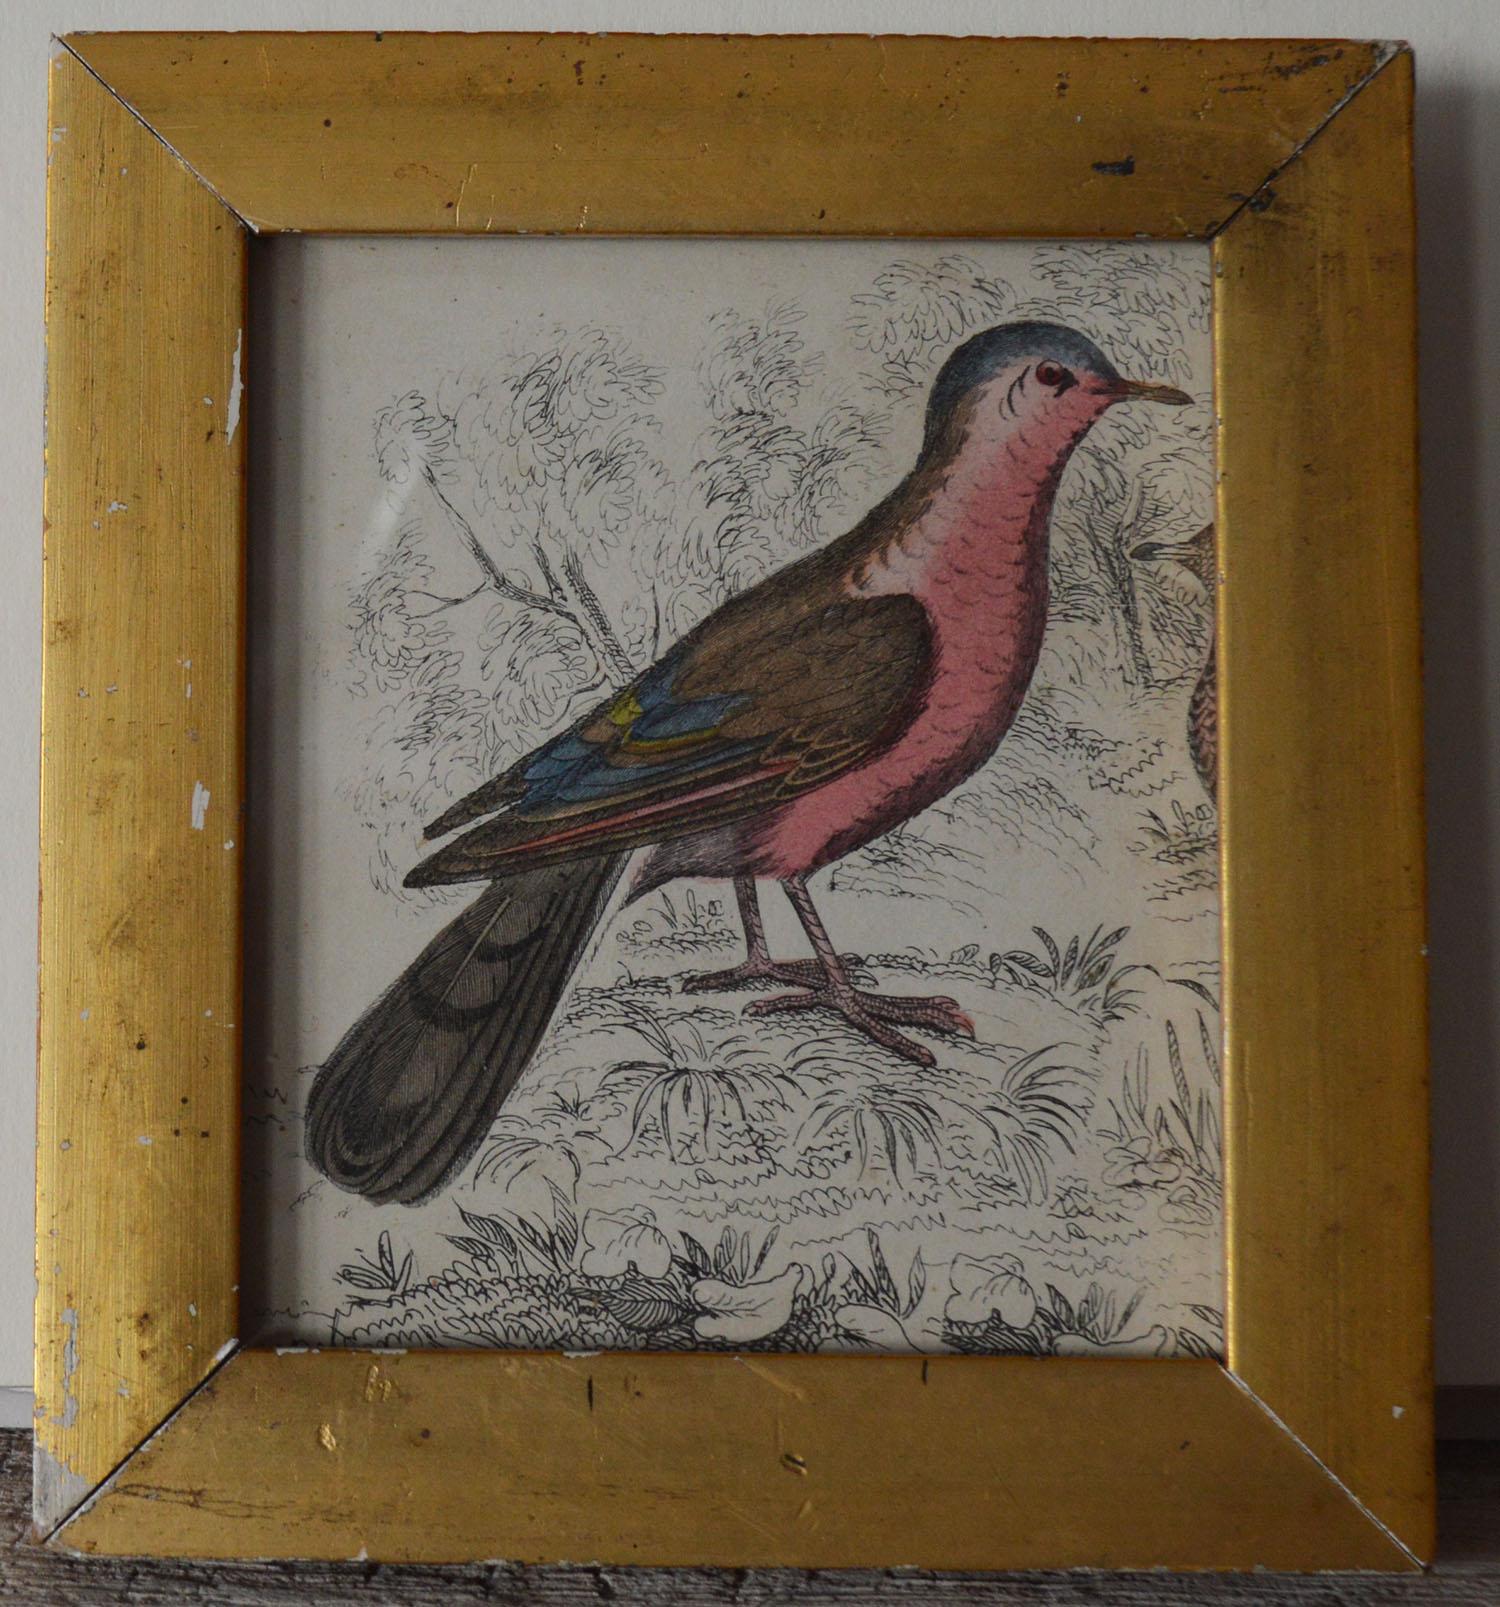 Other Original Antique Print of a Red Bird, 1847